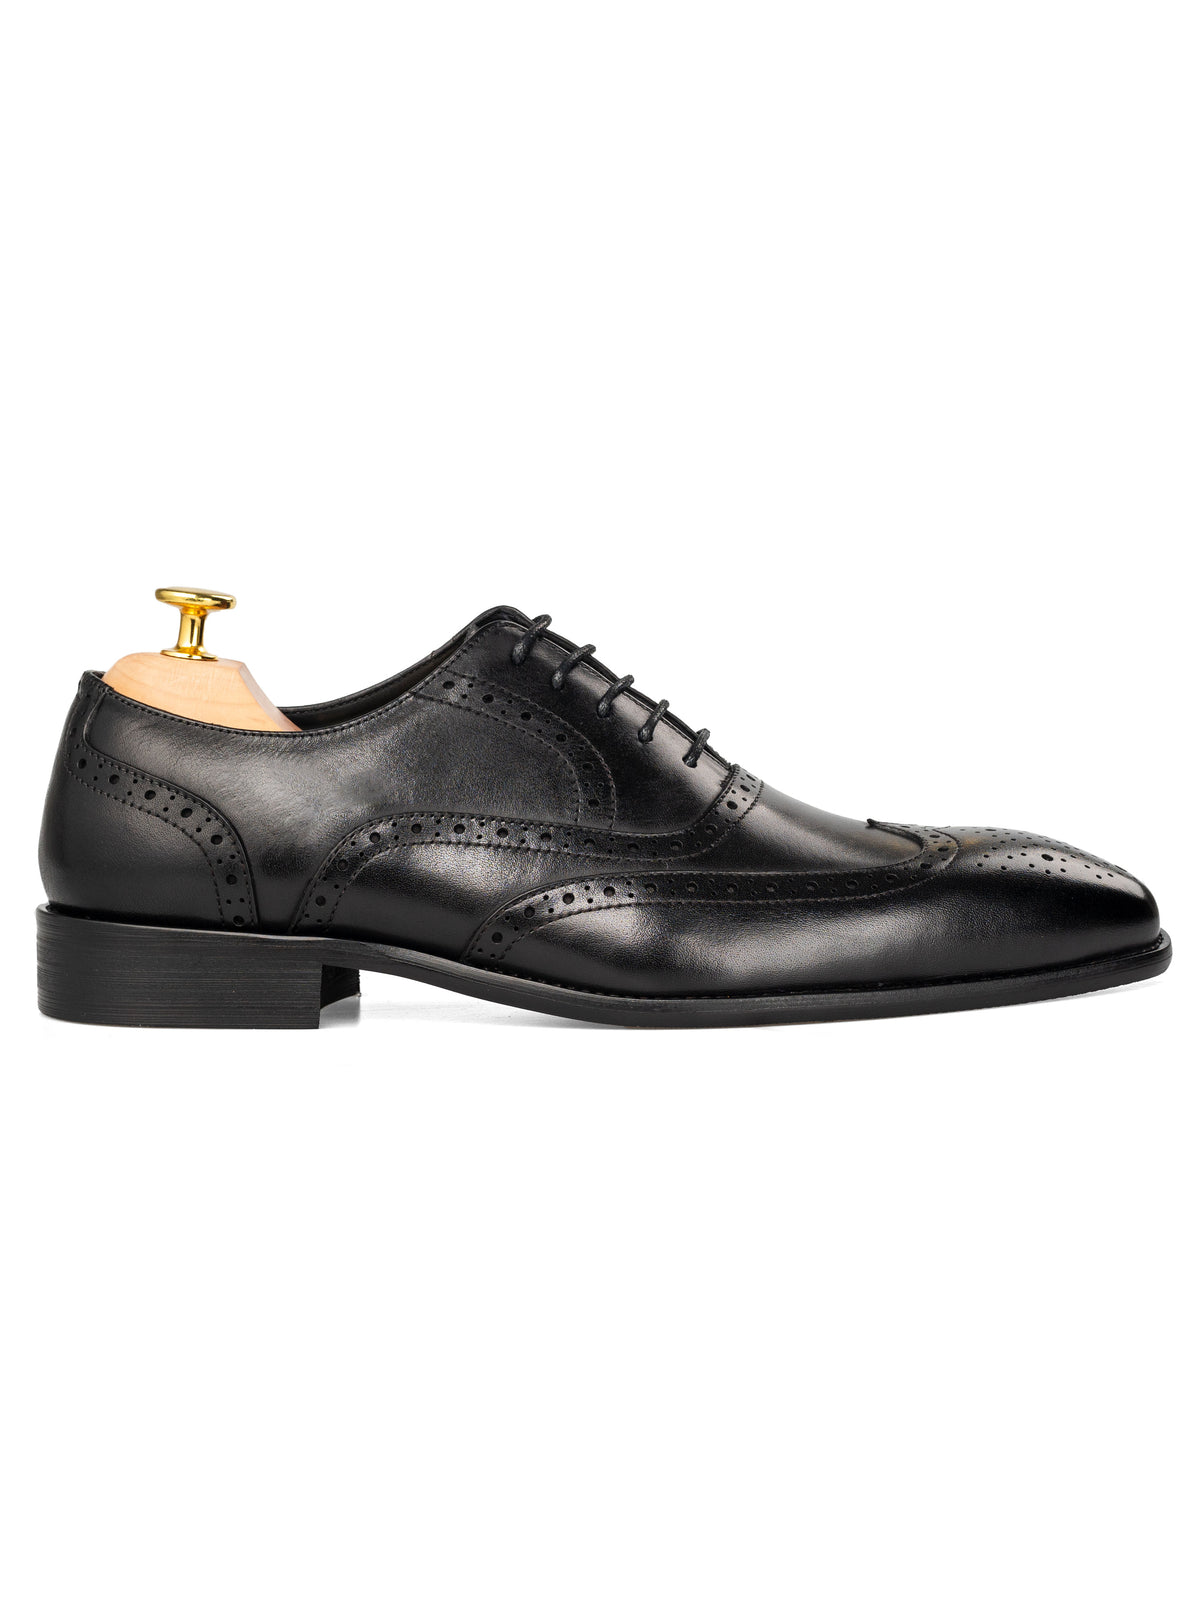 Oxford Brogue Wingtip - Black Lace Up (Chisel Toe) | Zeve Shoes